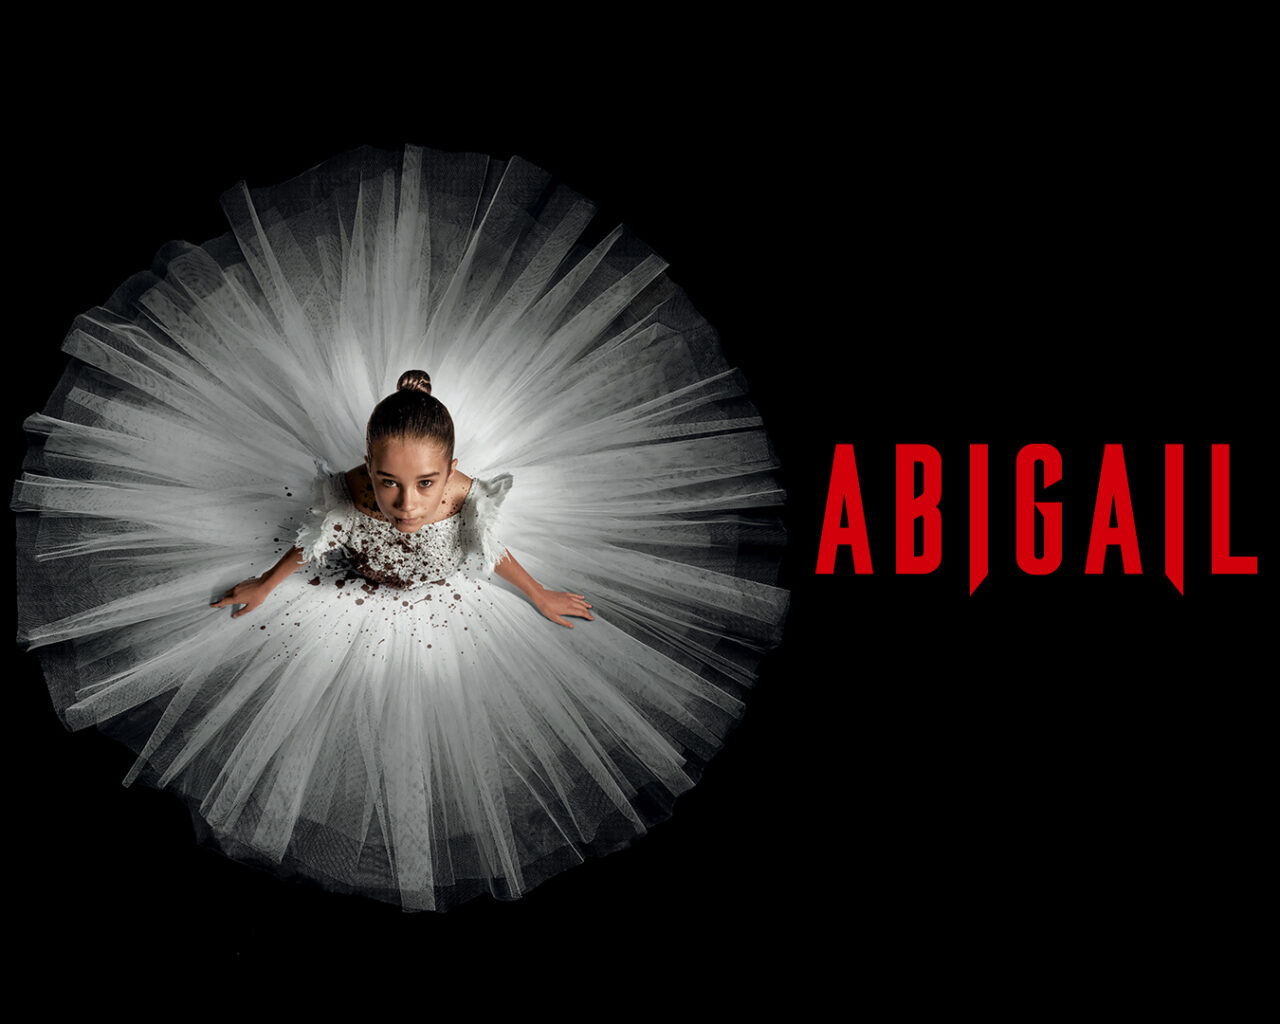 Abigail key art (Universal Pictures Home Entertainment)